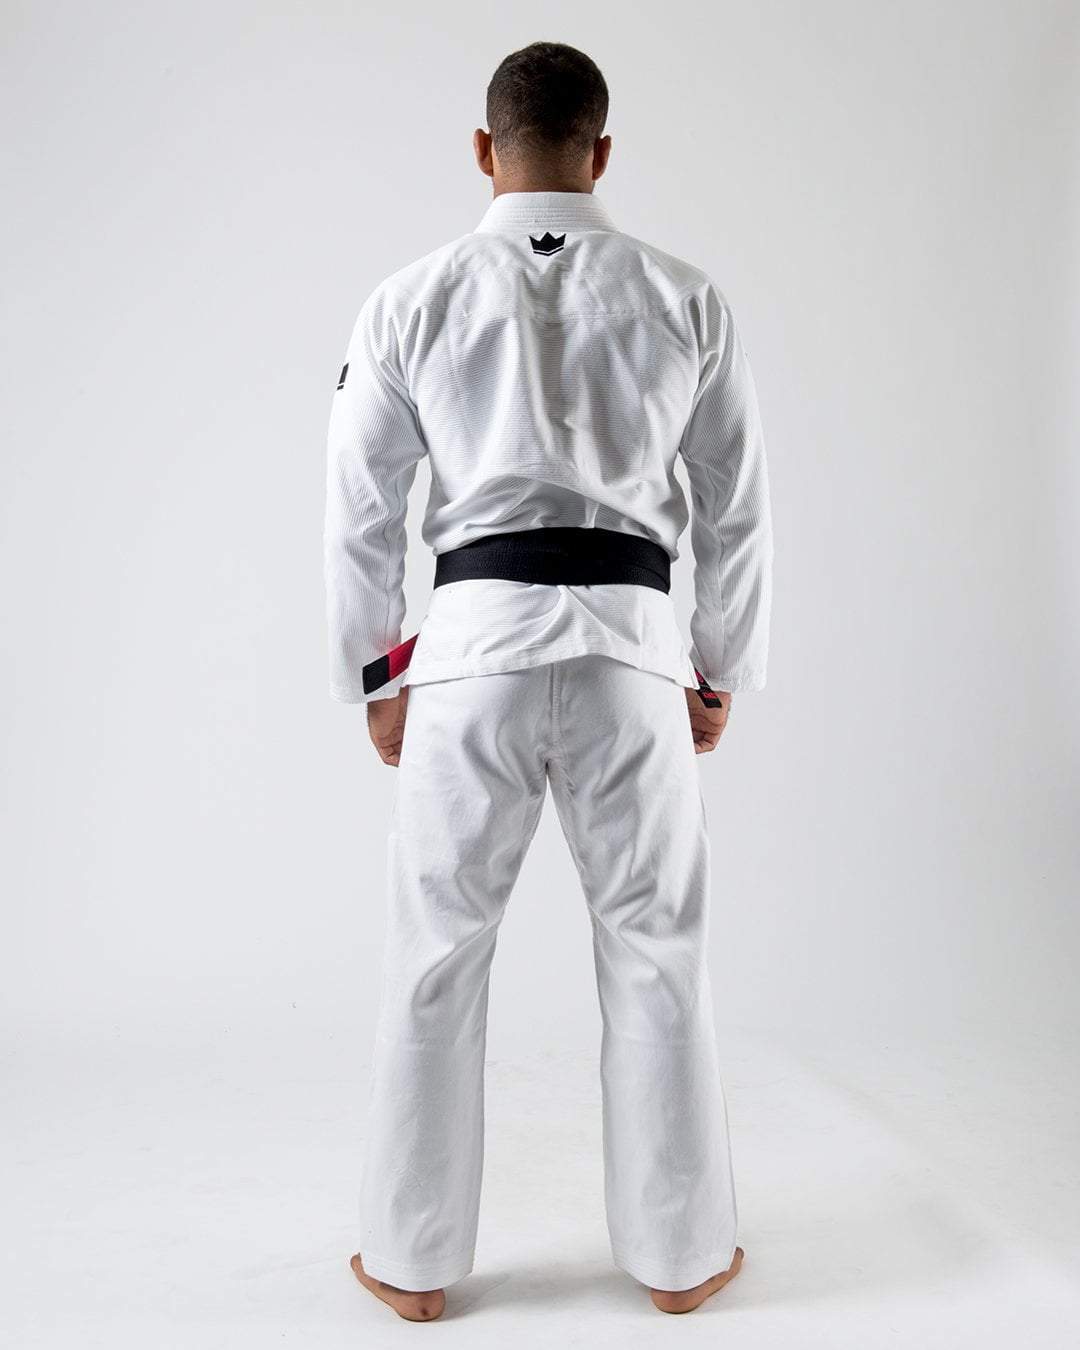 White Kingz Kore BJJ Kimono + White Belt > Free Shipping